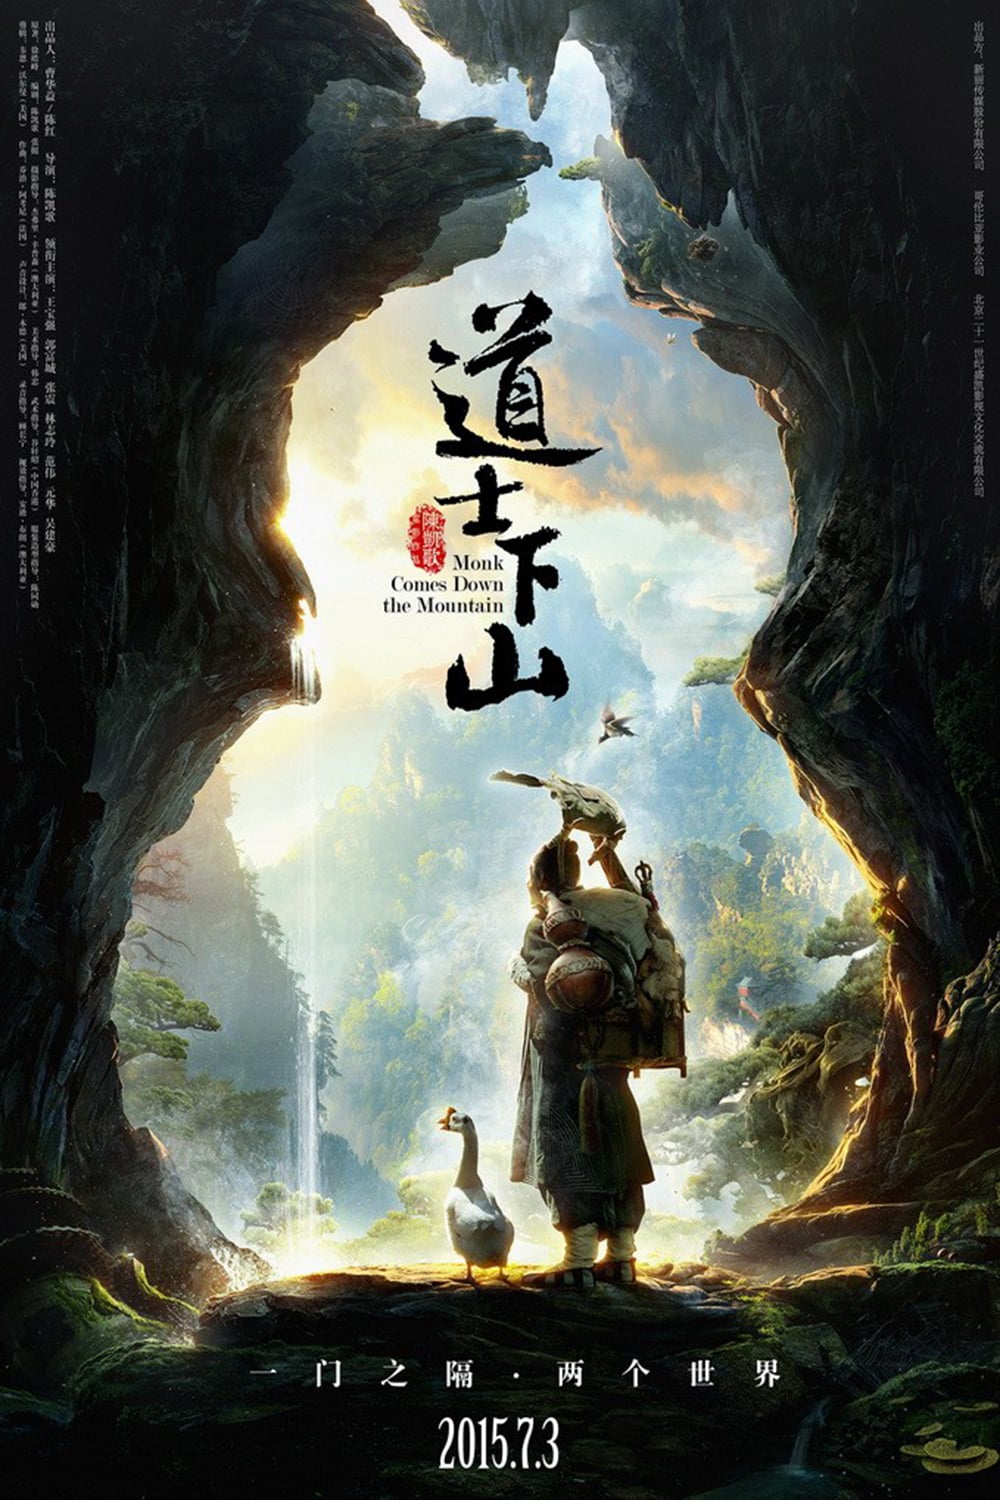 Plakat von "Monk Comes Down The Mountain"